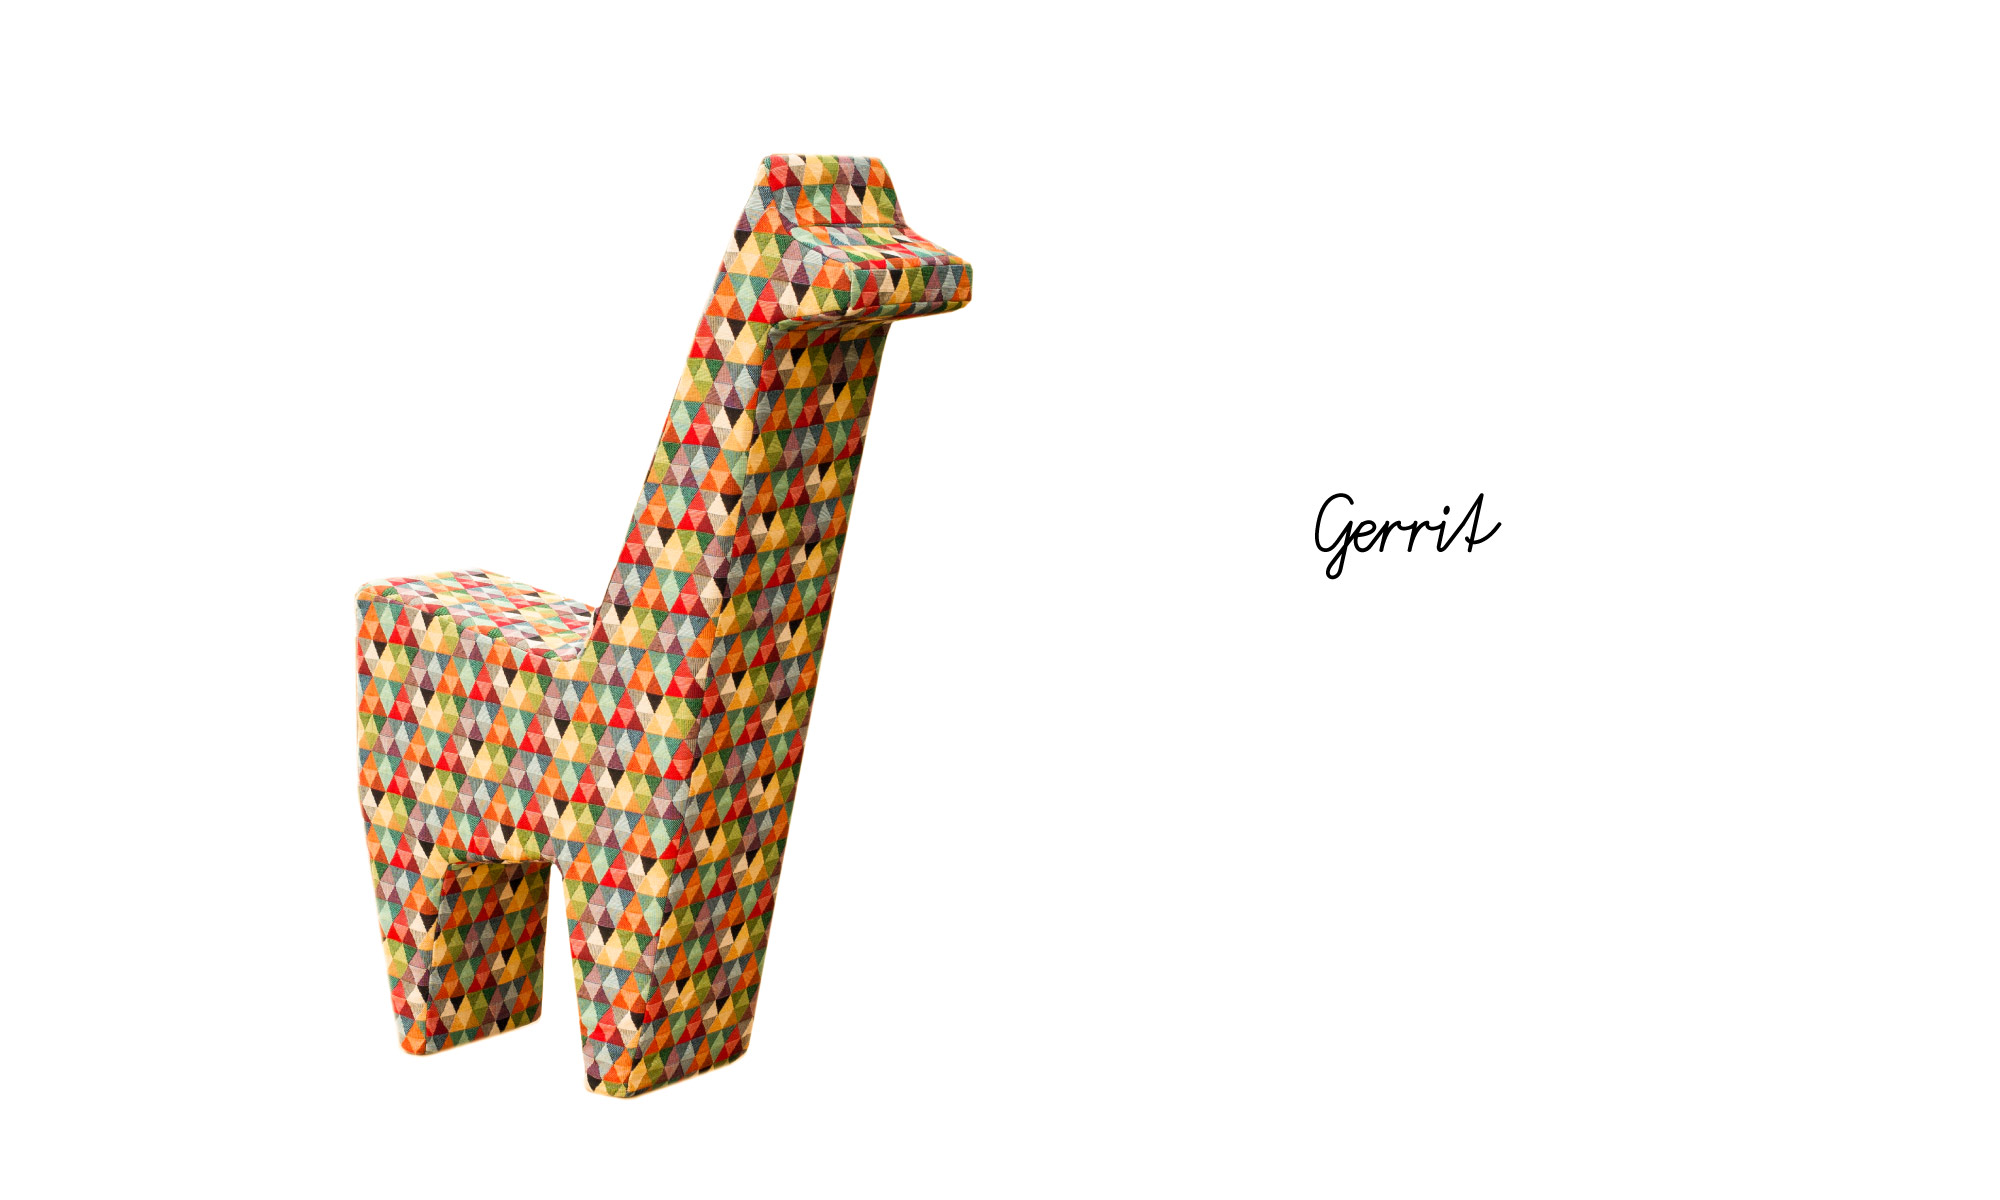 Woof_Gerrit giraffe